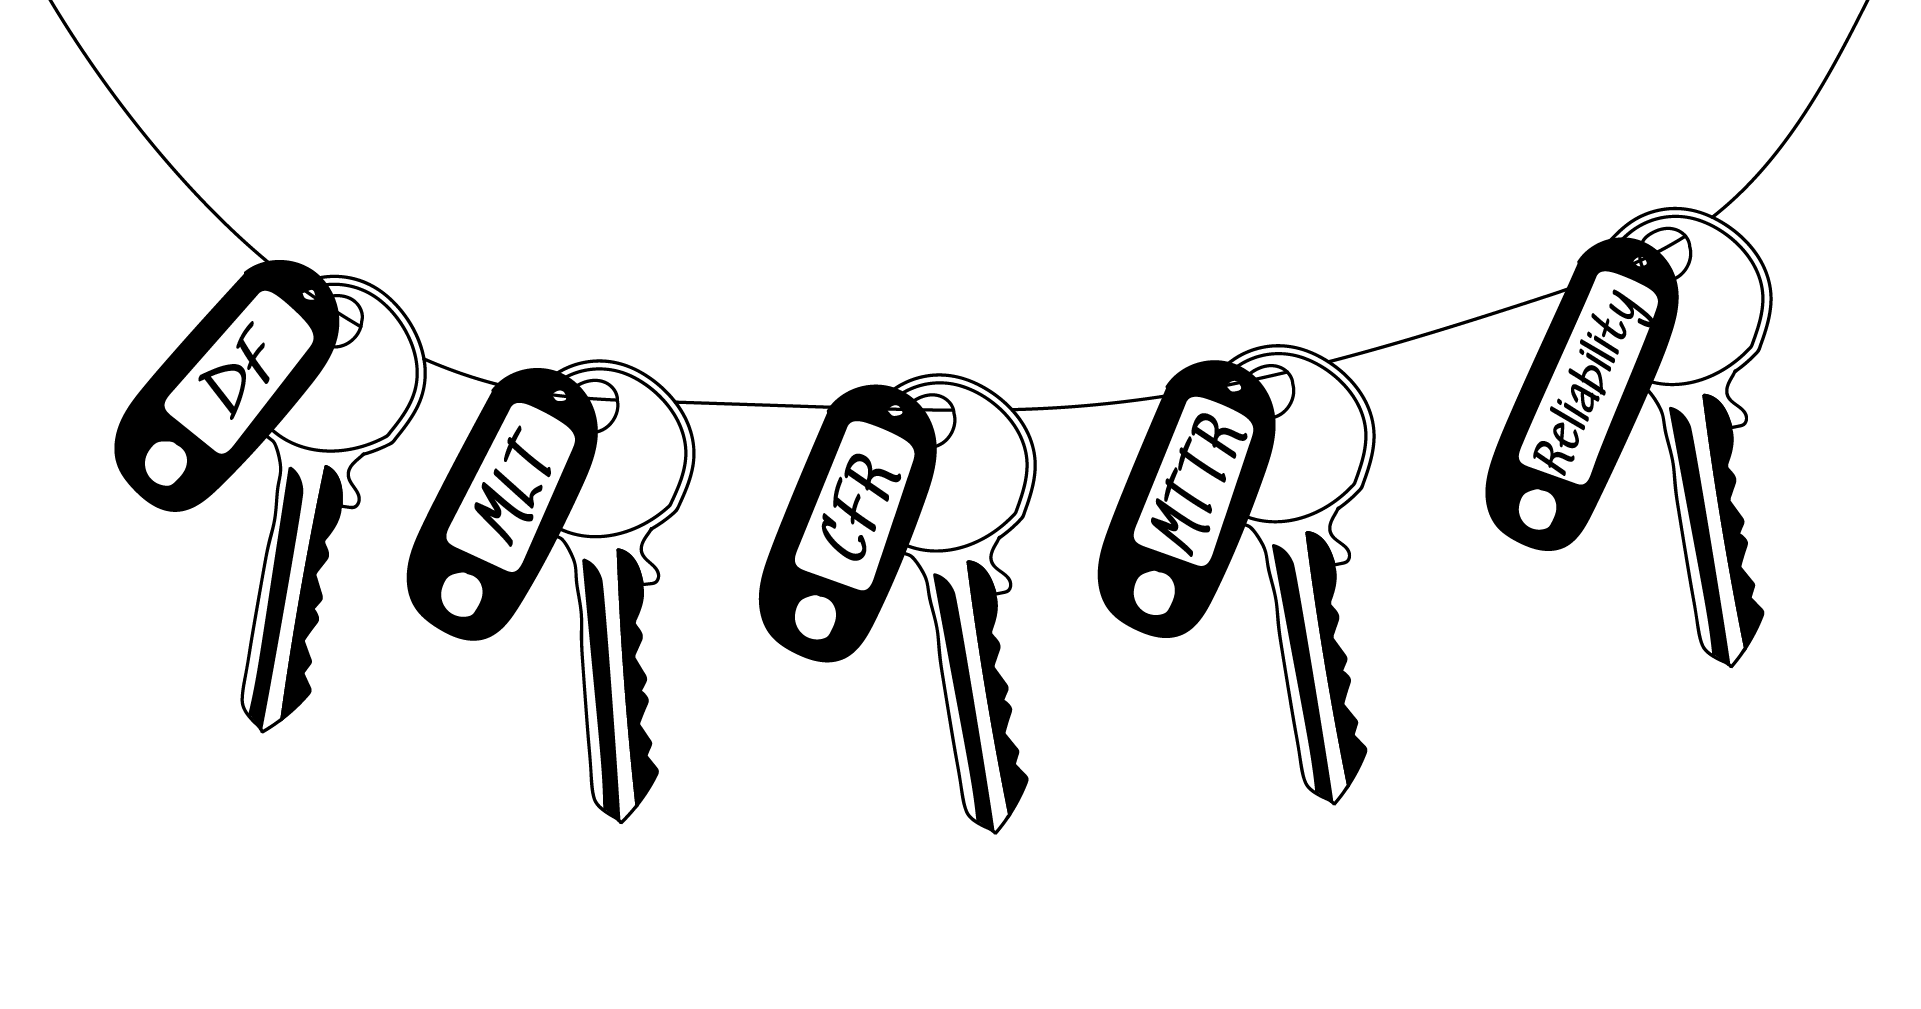 All five keys, tied together